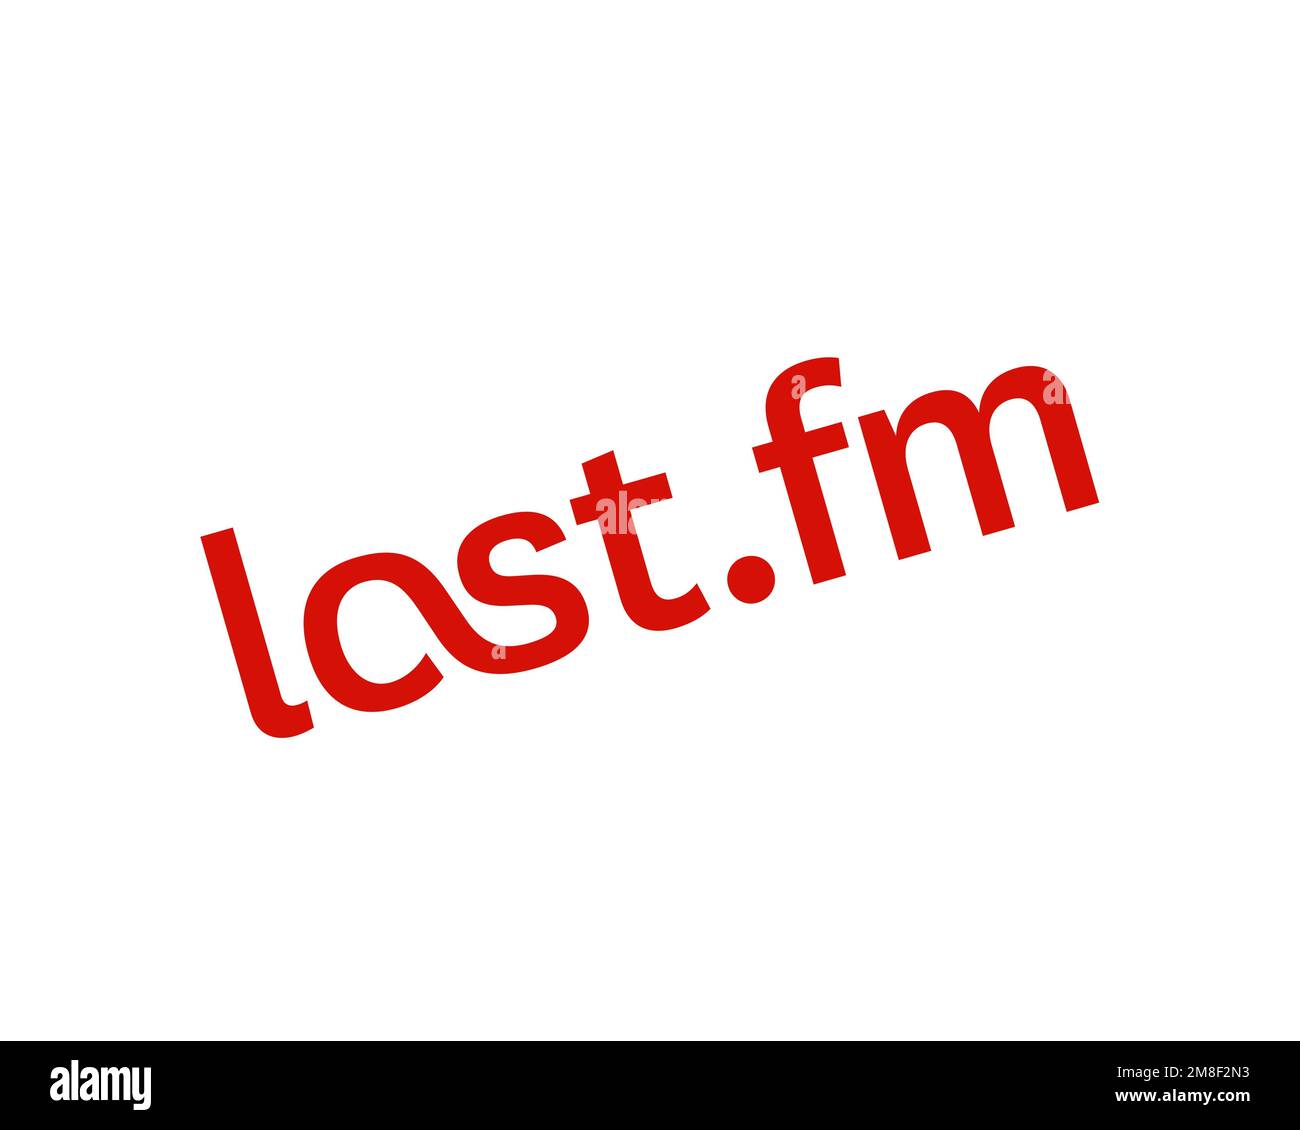 Last. fm, rotated logo, white background Stock Photo